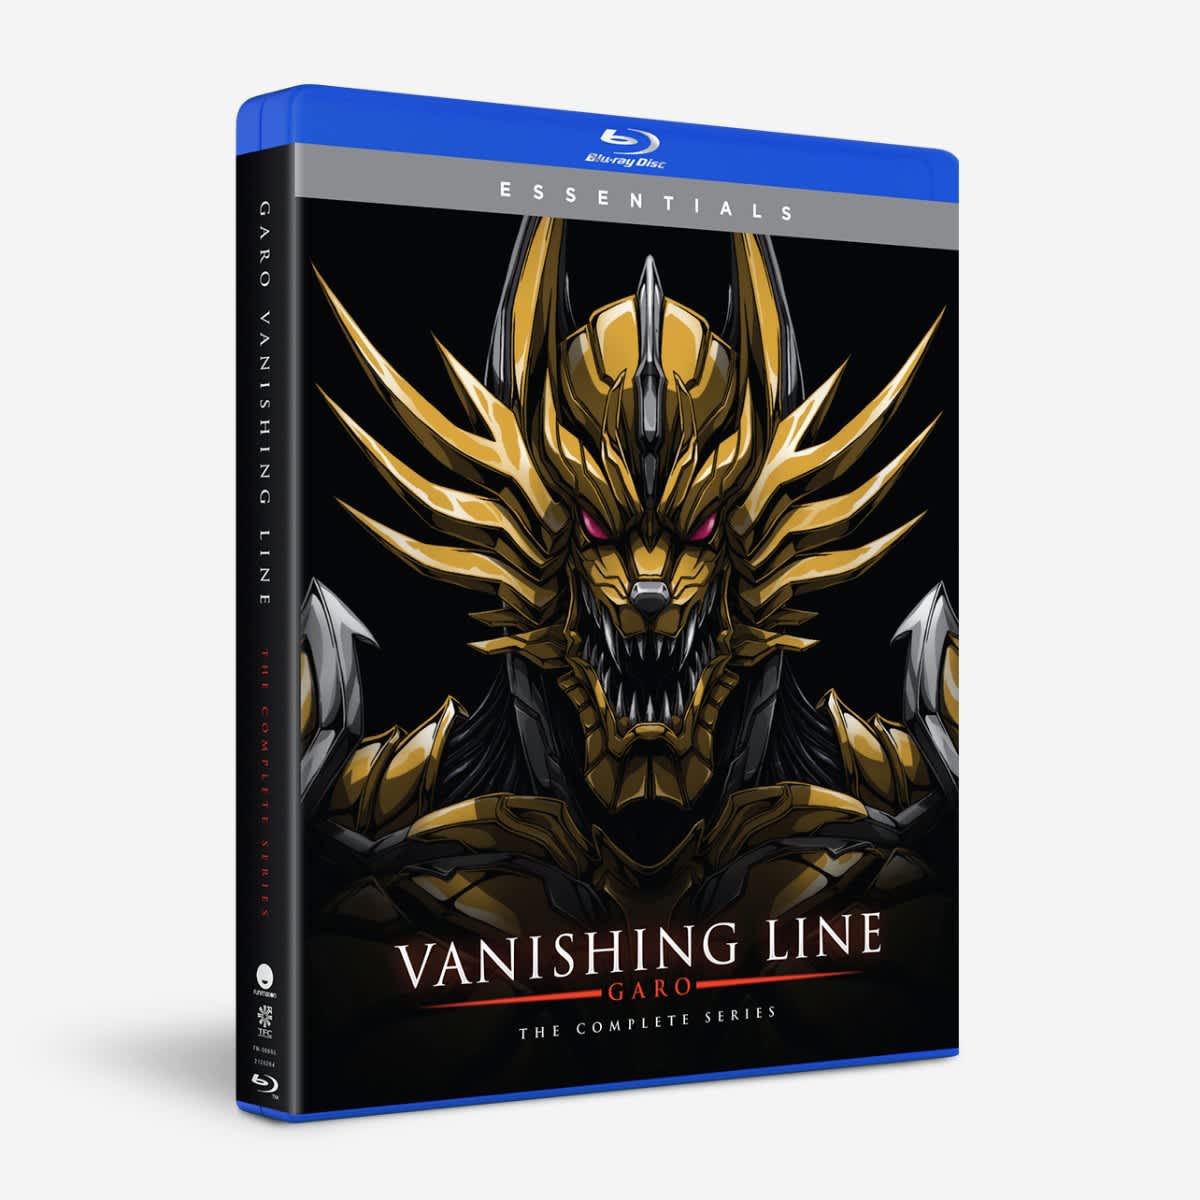 GARO -VANISHING LINE- Season 1 - The Complete Series - Essentials 